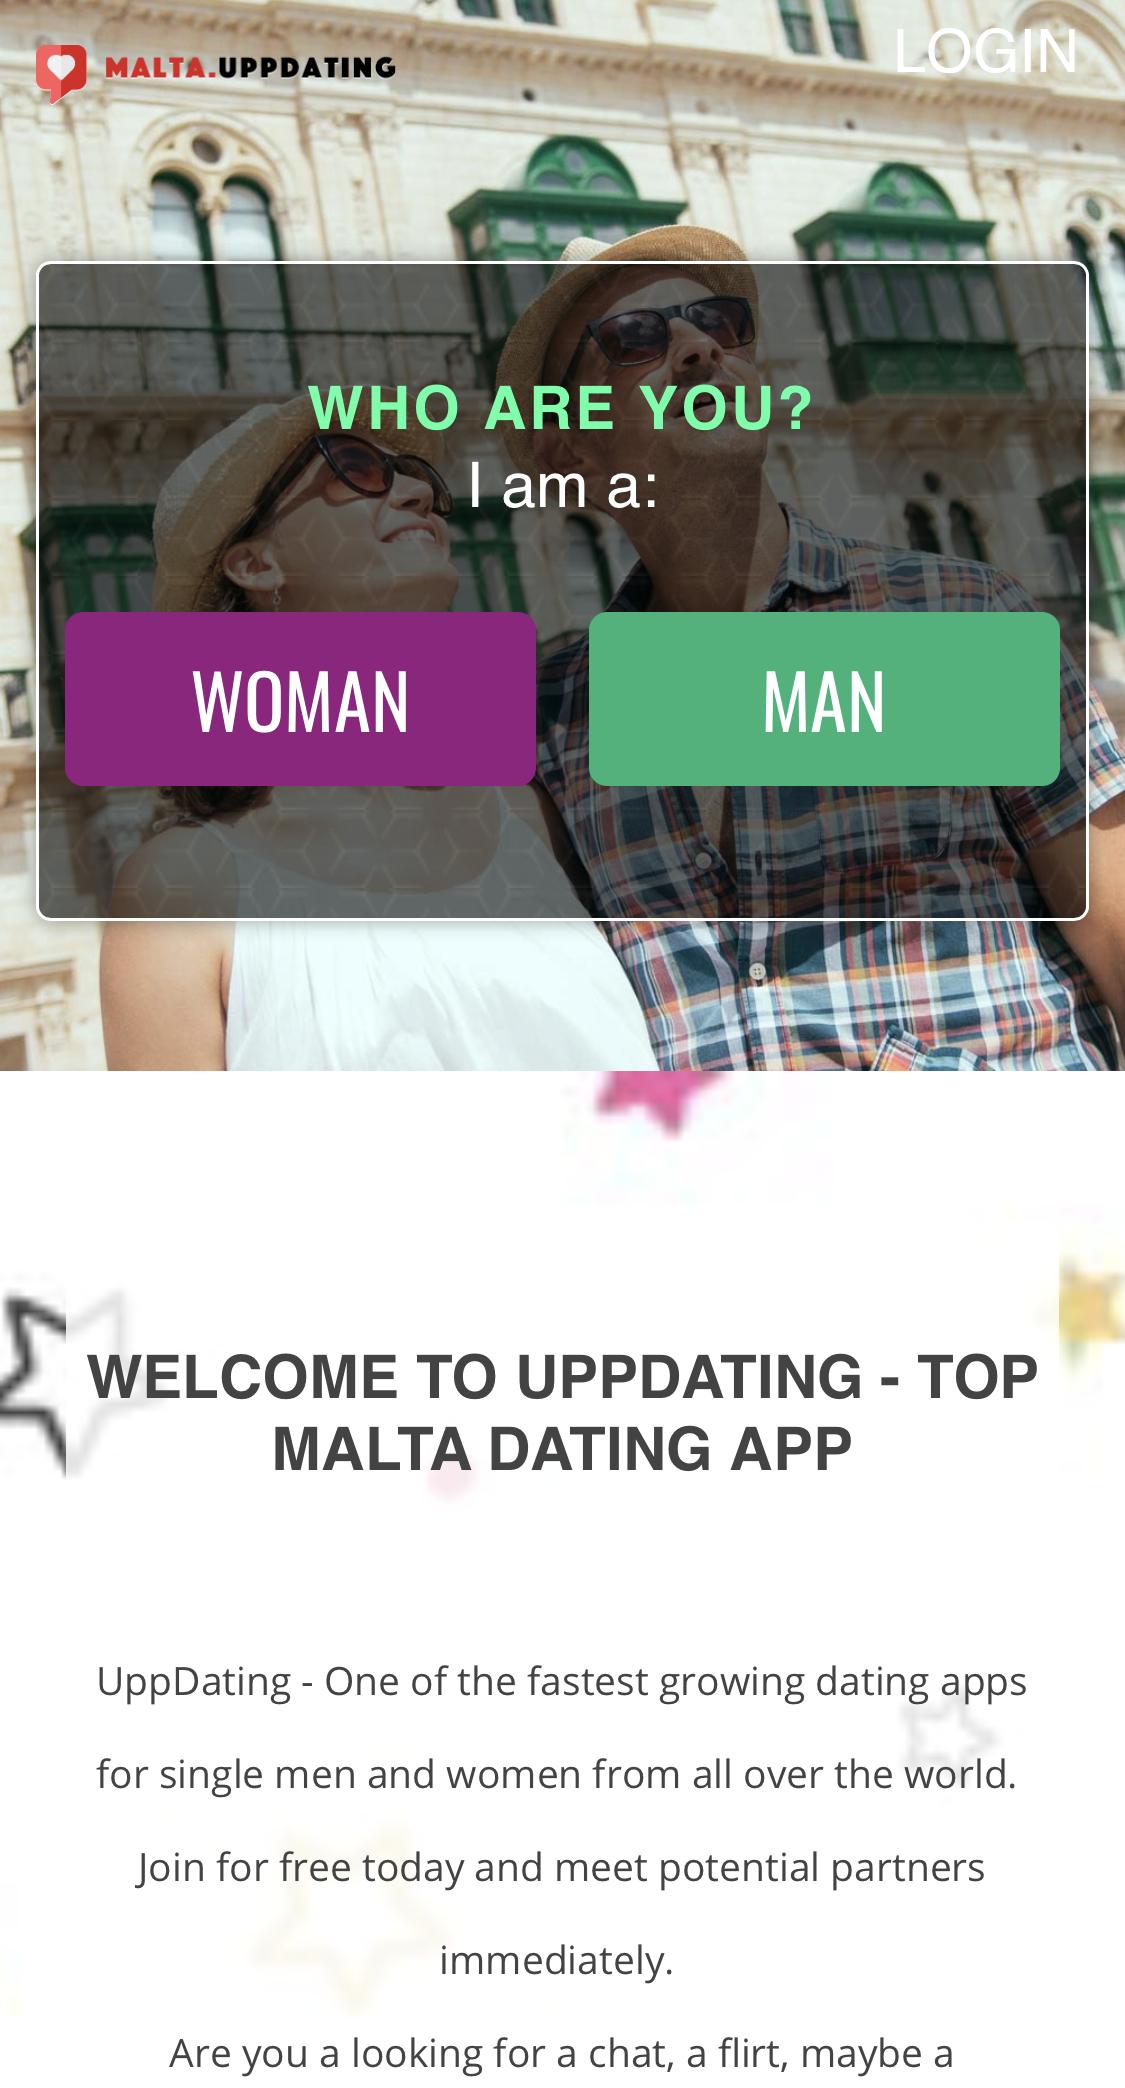 malta dating app cum să devii un consultant de dating certificat